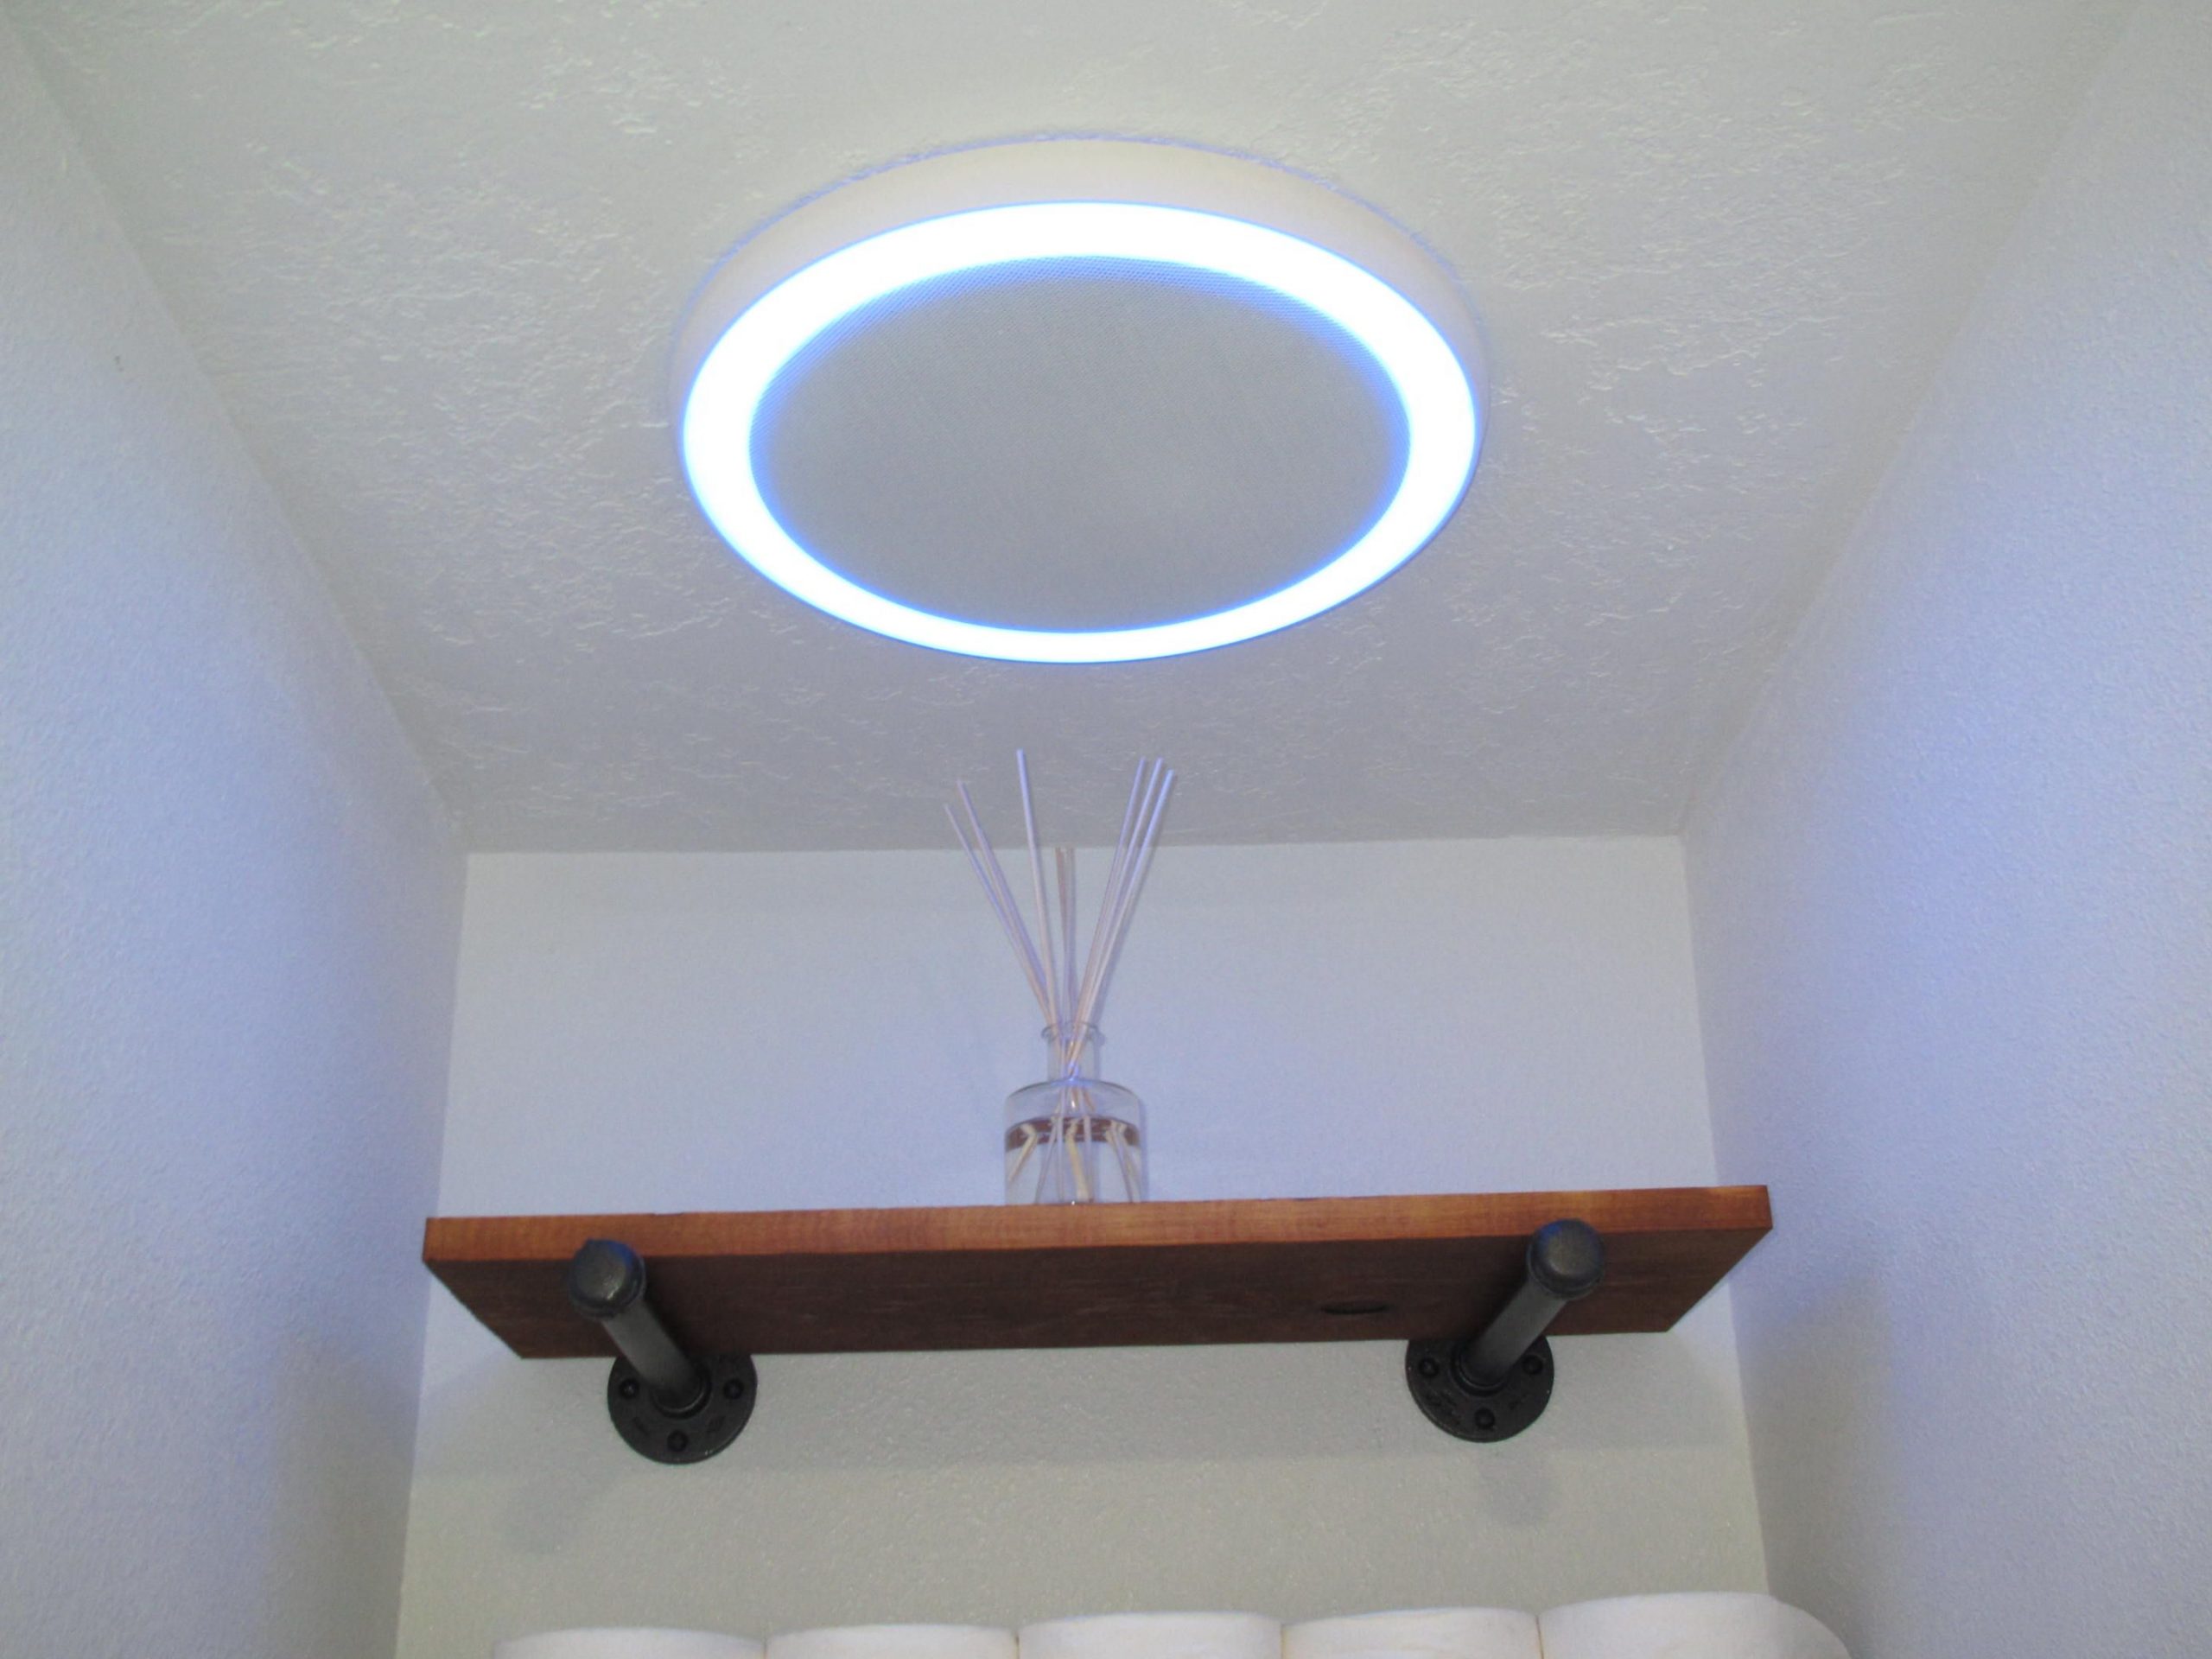 Bathroom Fan Wbluetooth Speaker Light And Blue Nightlight intended for dimensions 2816 X 2112